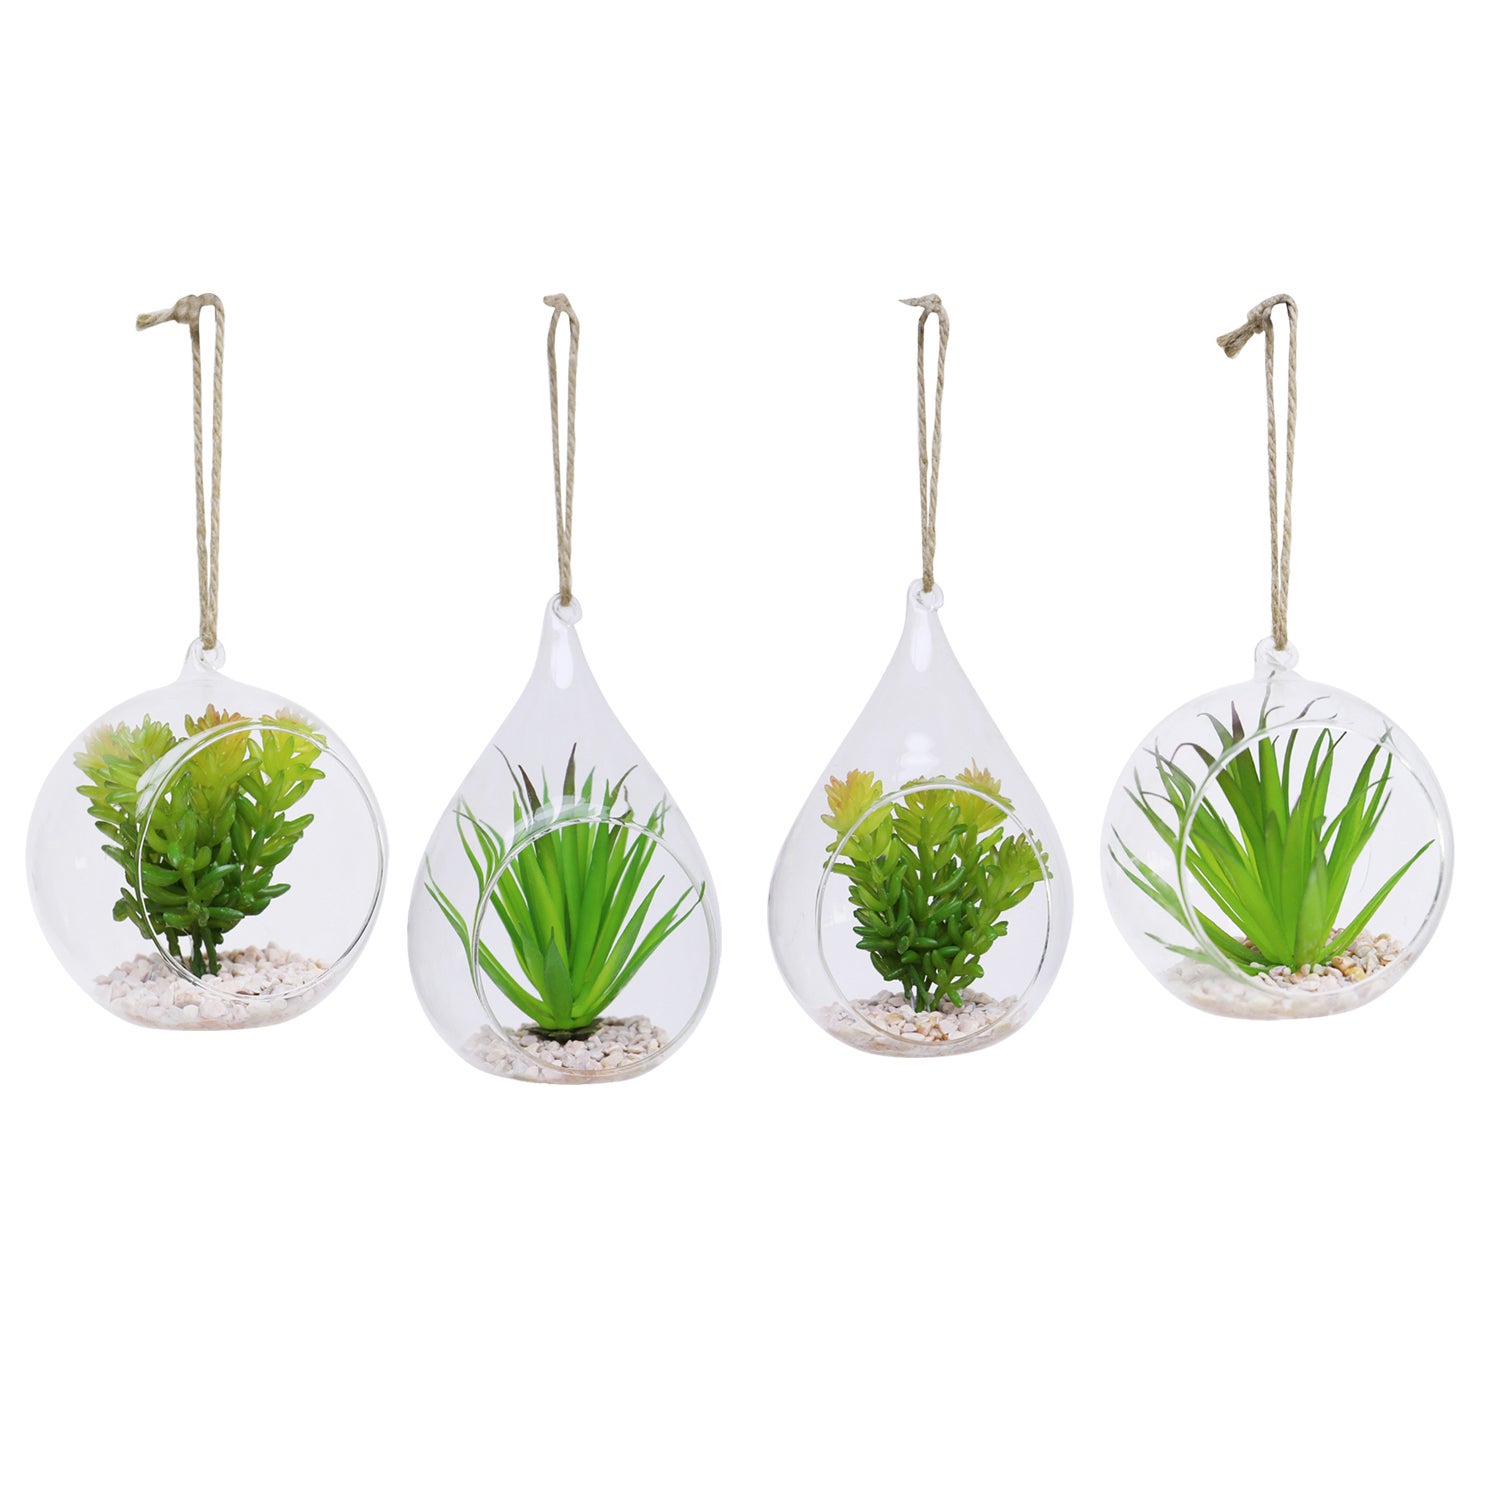 Set of 4 Hanging Succulents